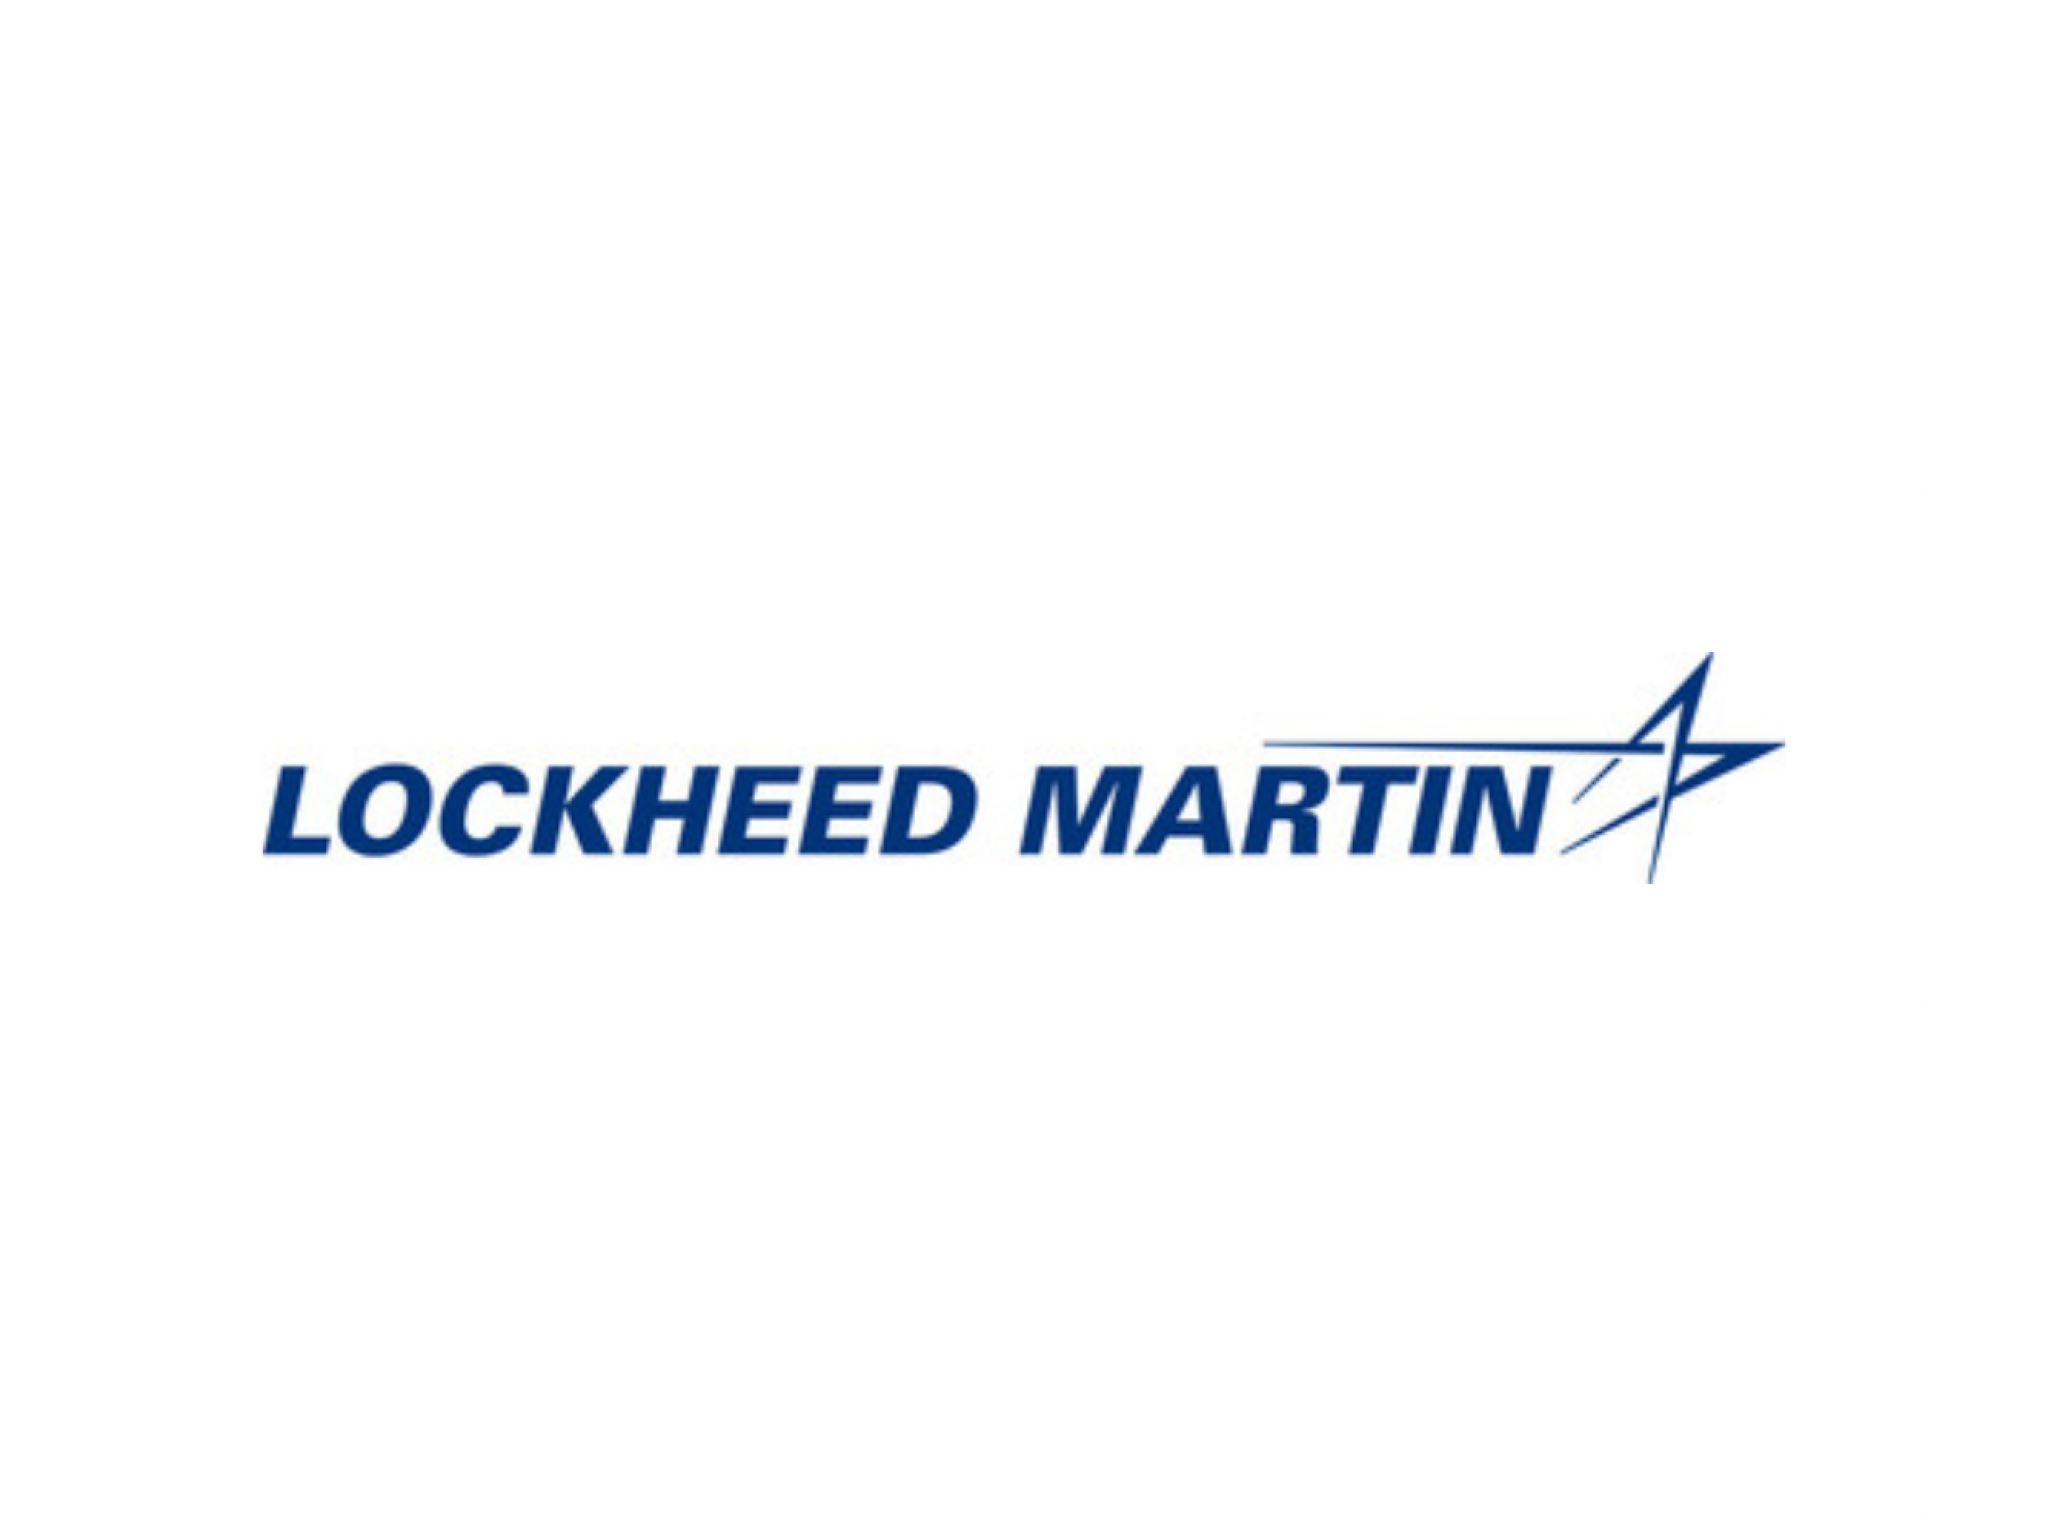  lockheed-martin-reveals-concerns-over-l3harris-aerojet-deal-report 